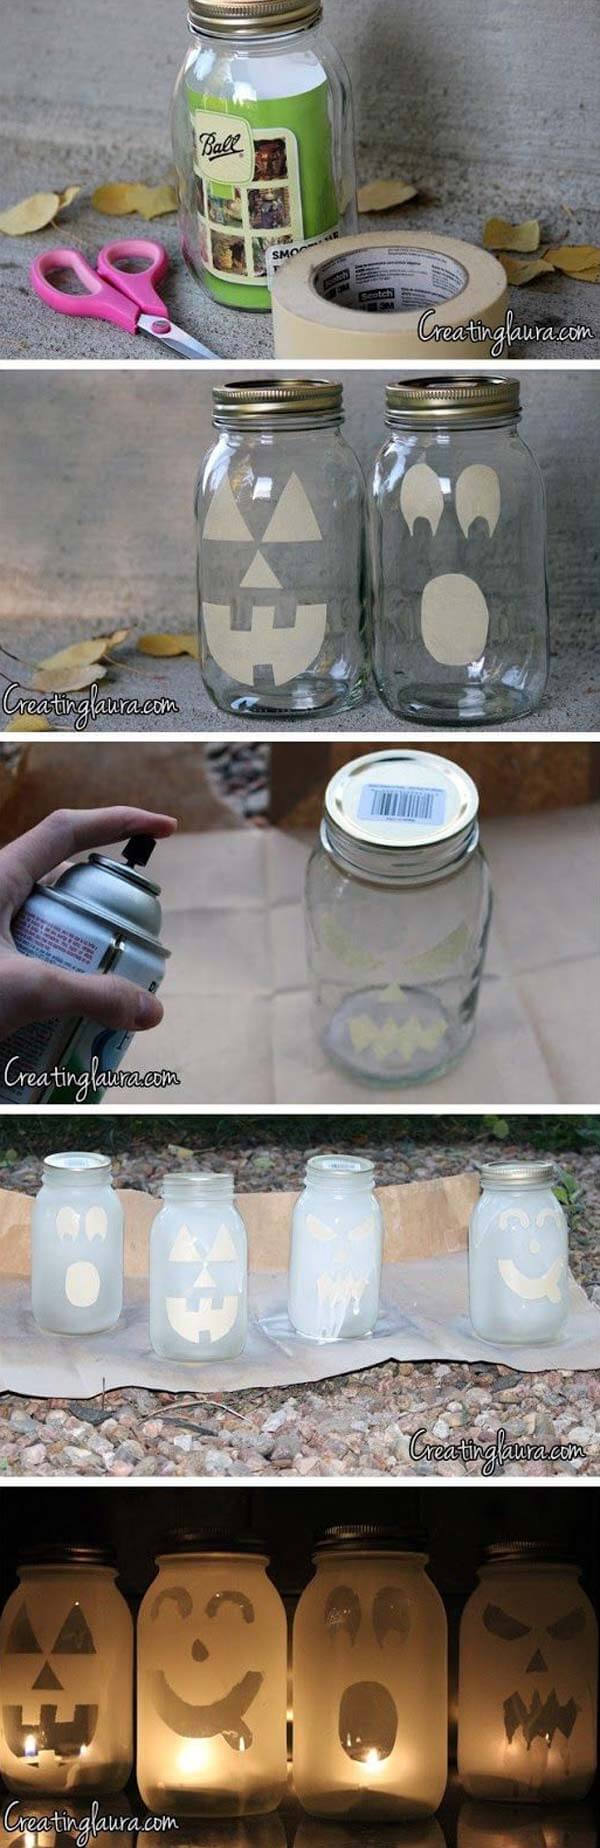 DIY Mason Jar Halloween Crafts: Spray Painted Mason Jar Ghosts